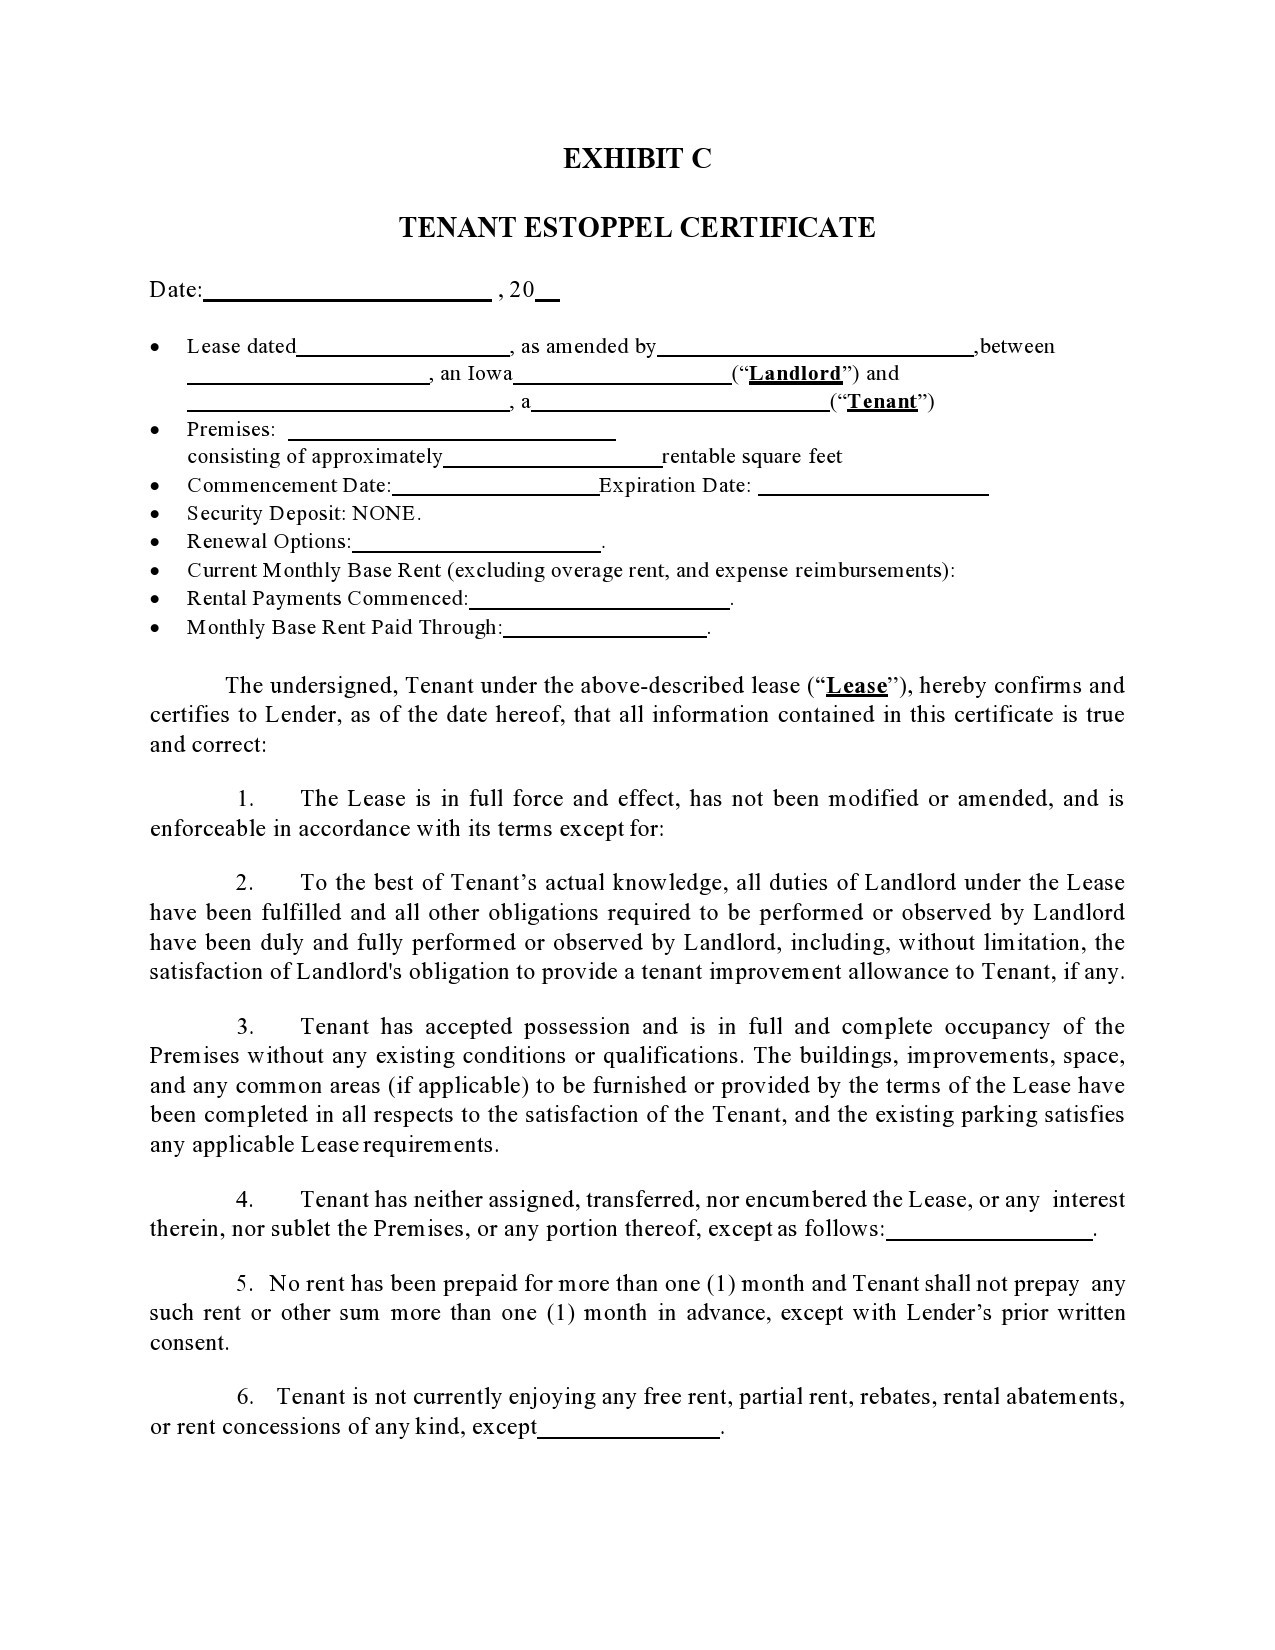 41 Real Estoppel Certificate Forms ( Samples) ᐅ TemplateLab